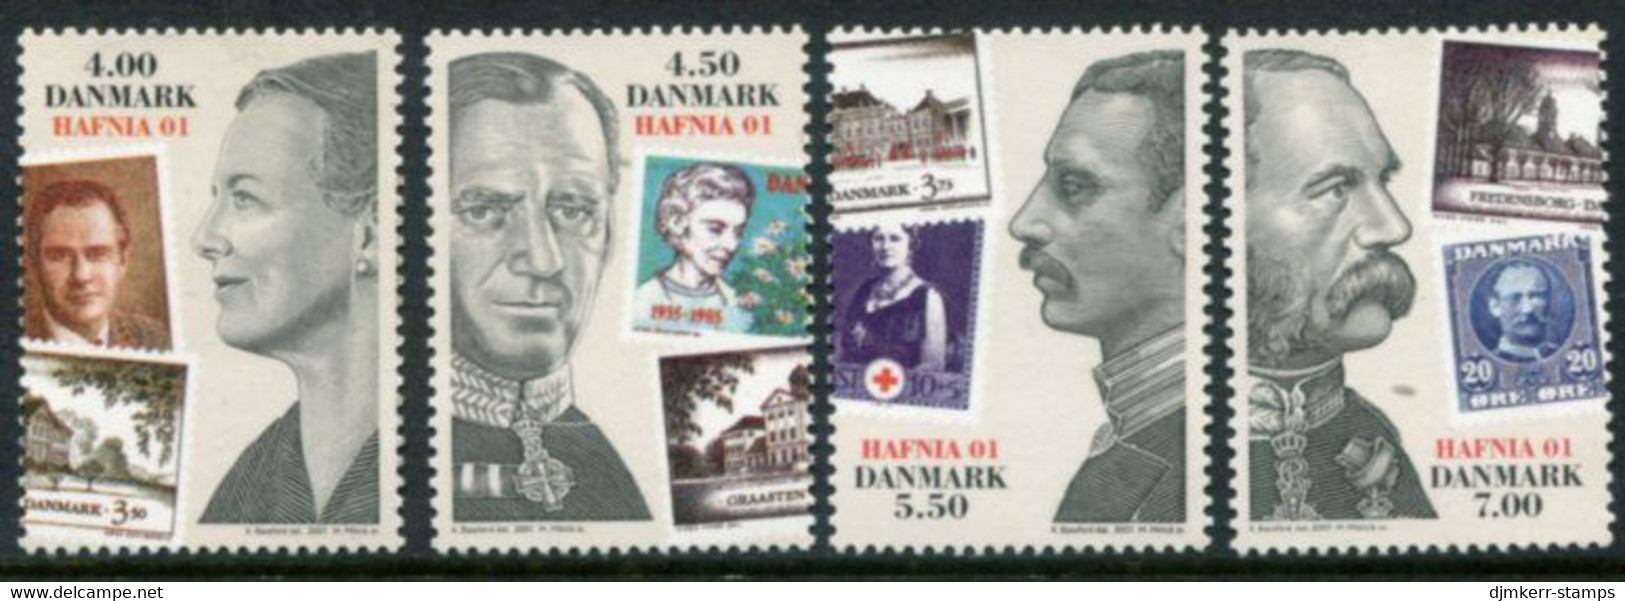 DENMARK 2001 HAFNIA'01 Stamp Exhibition MNH / **.. Michel 1287-90 - Nuovi